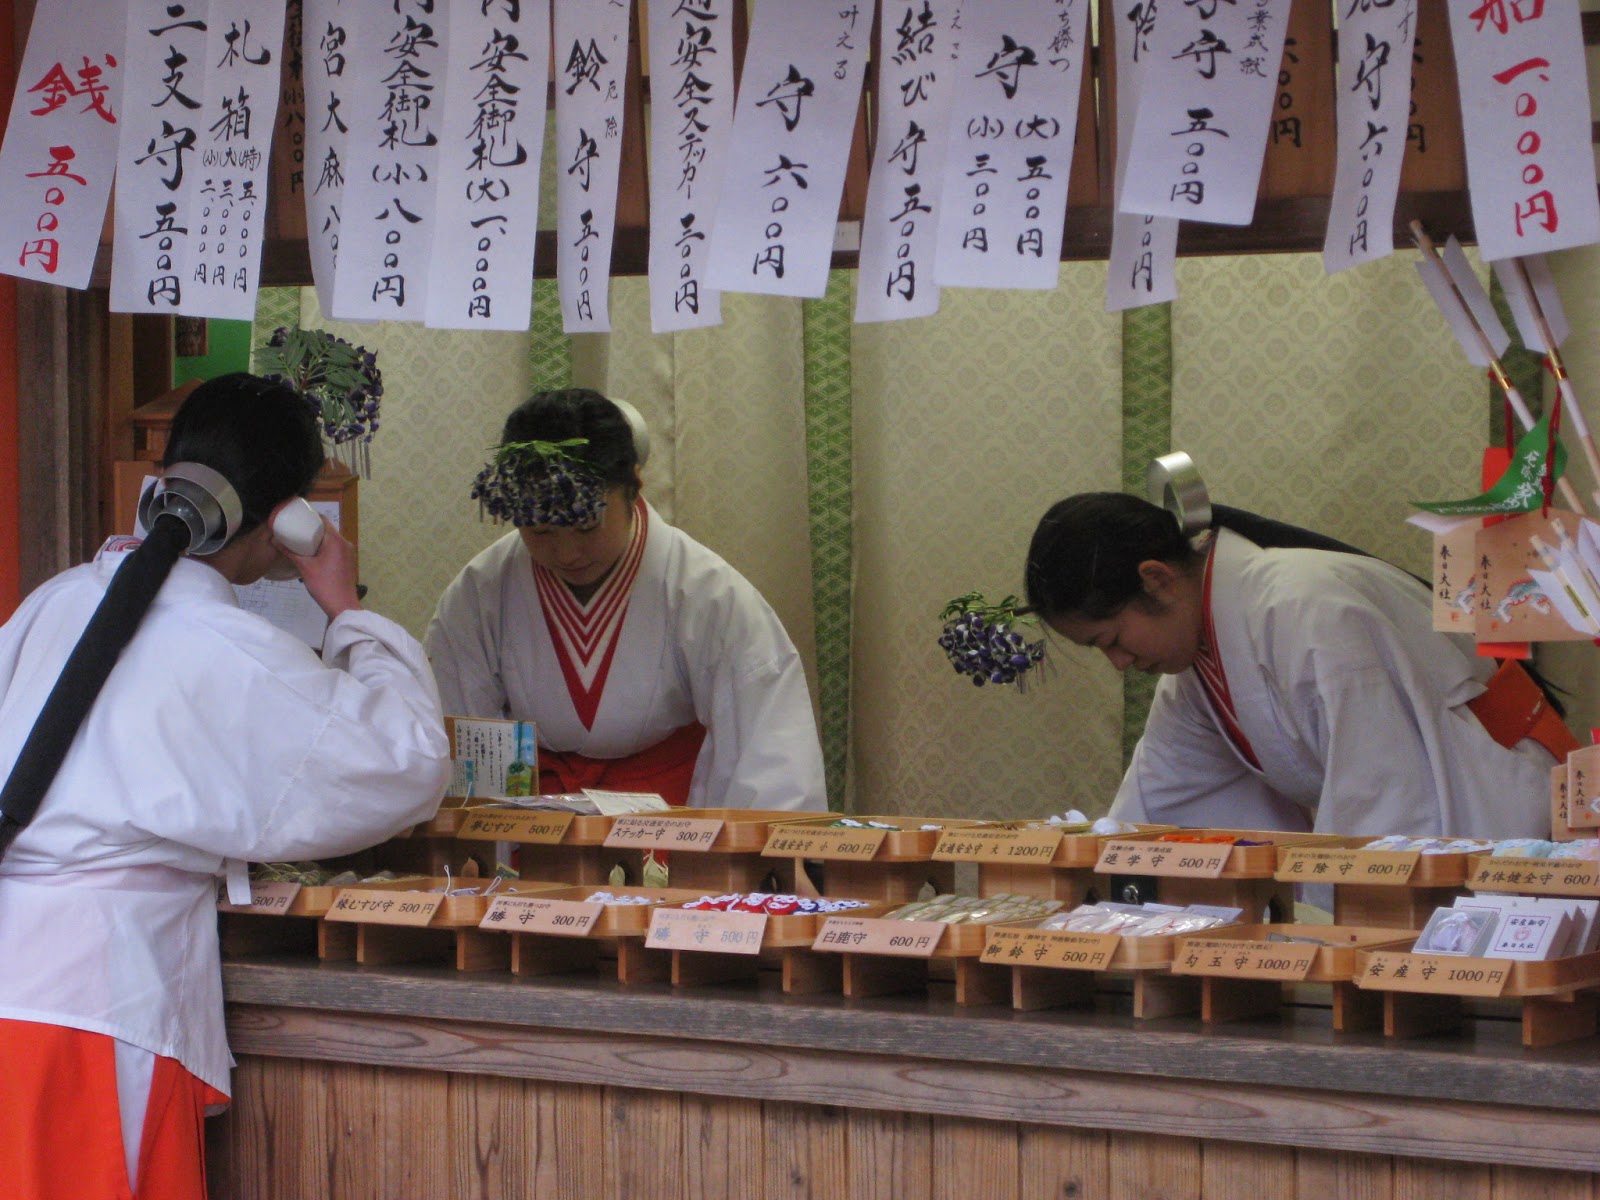 Kyoto - Shrine maidens wear wisteria flowers in their hair